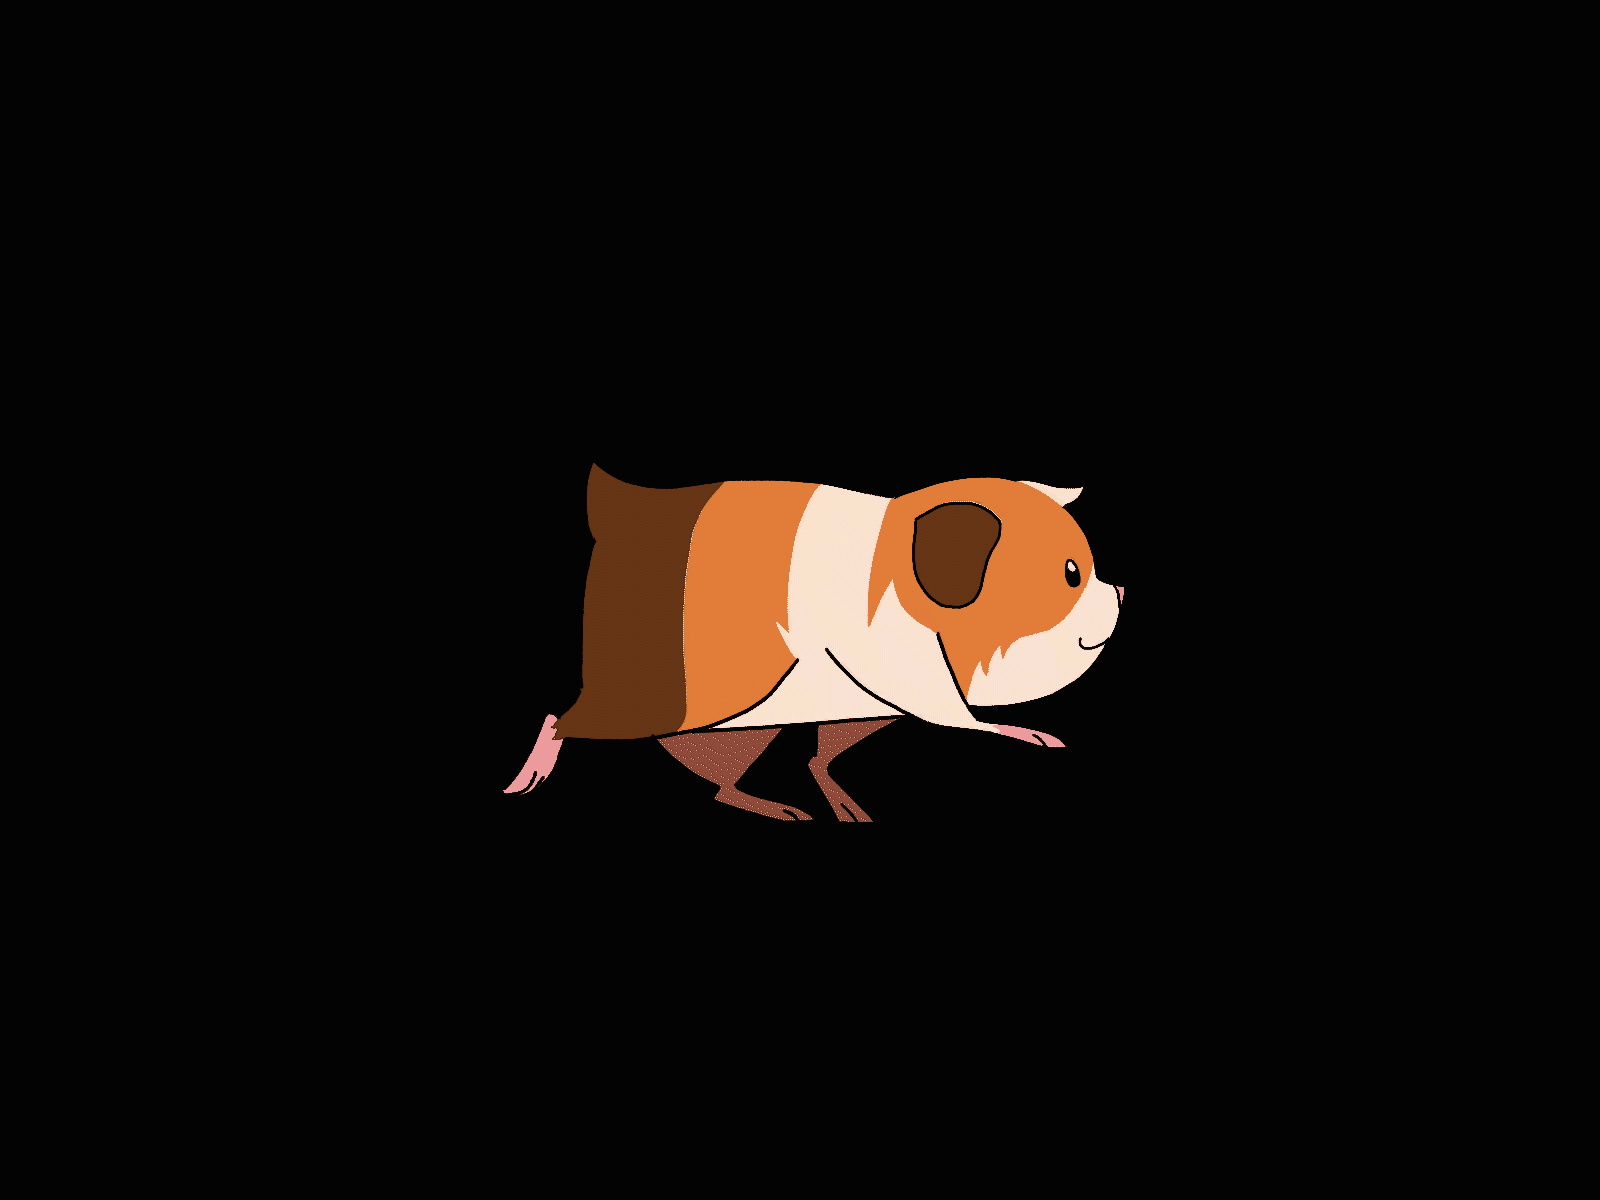 Guinea Pig Animation animation frame by frame